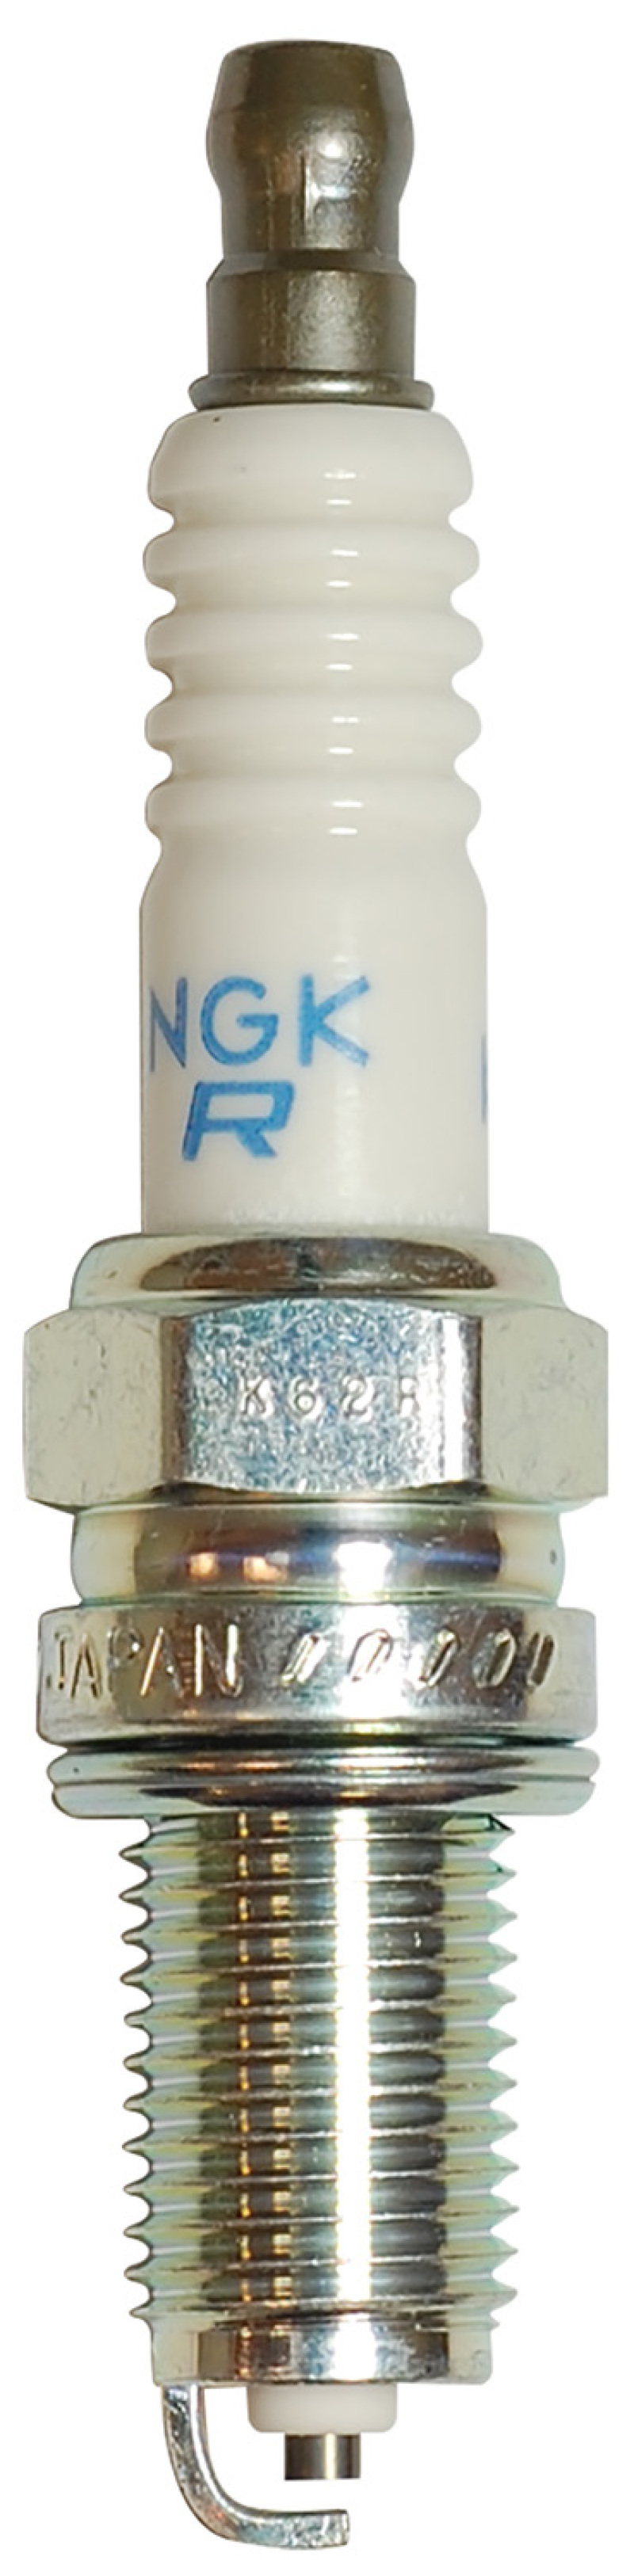 NGK Standard Spark Plug Box of 4 (KR9C-G) - 90893